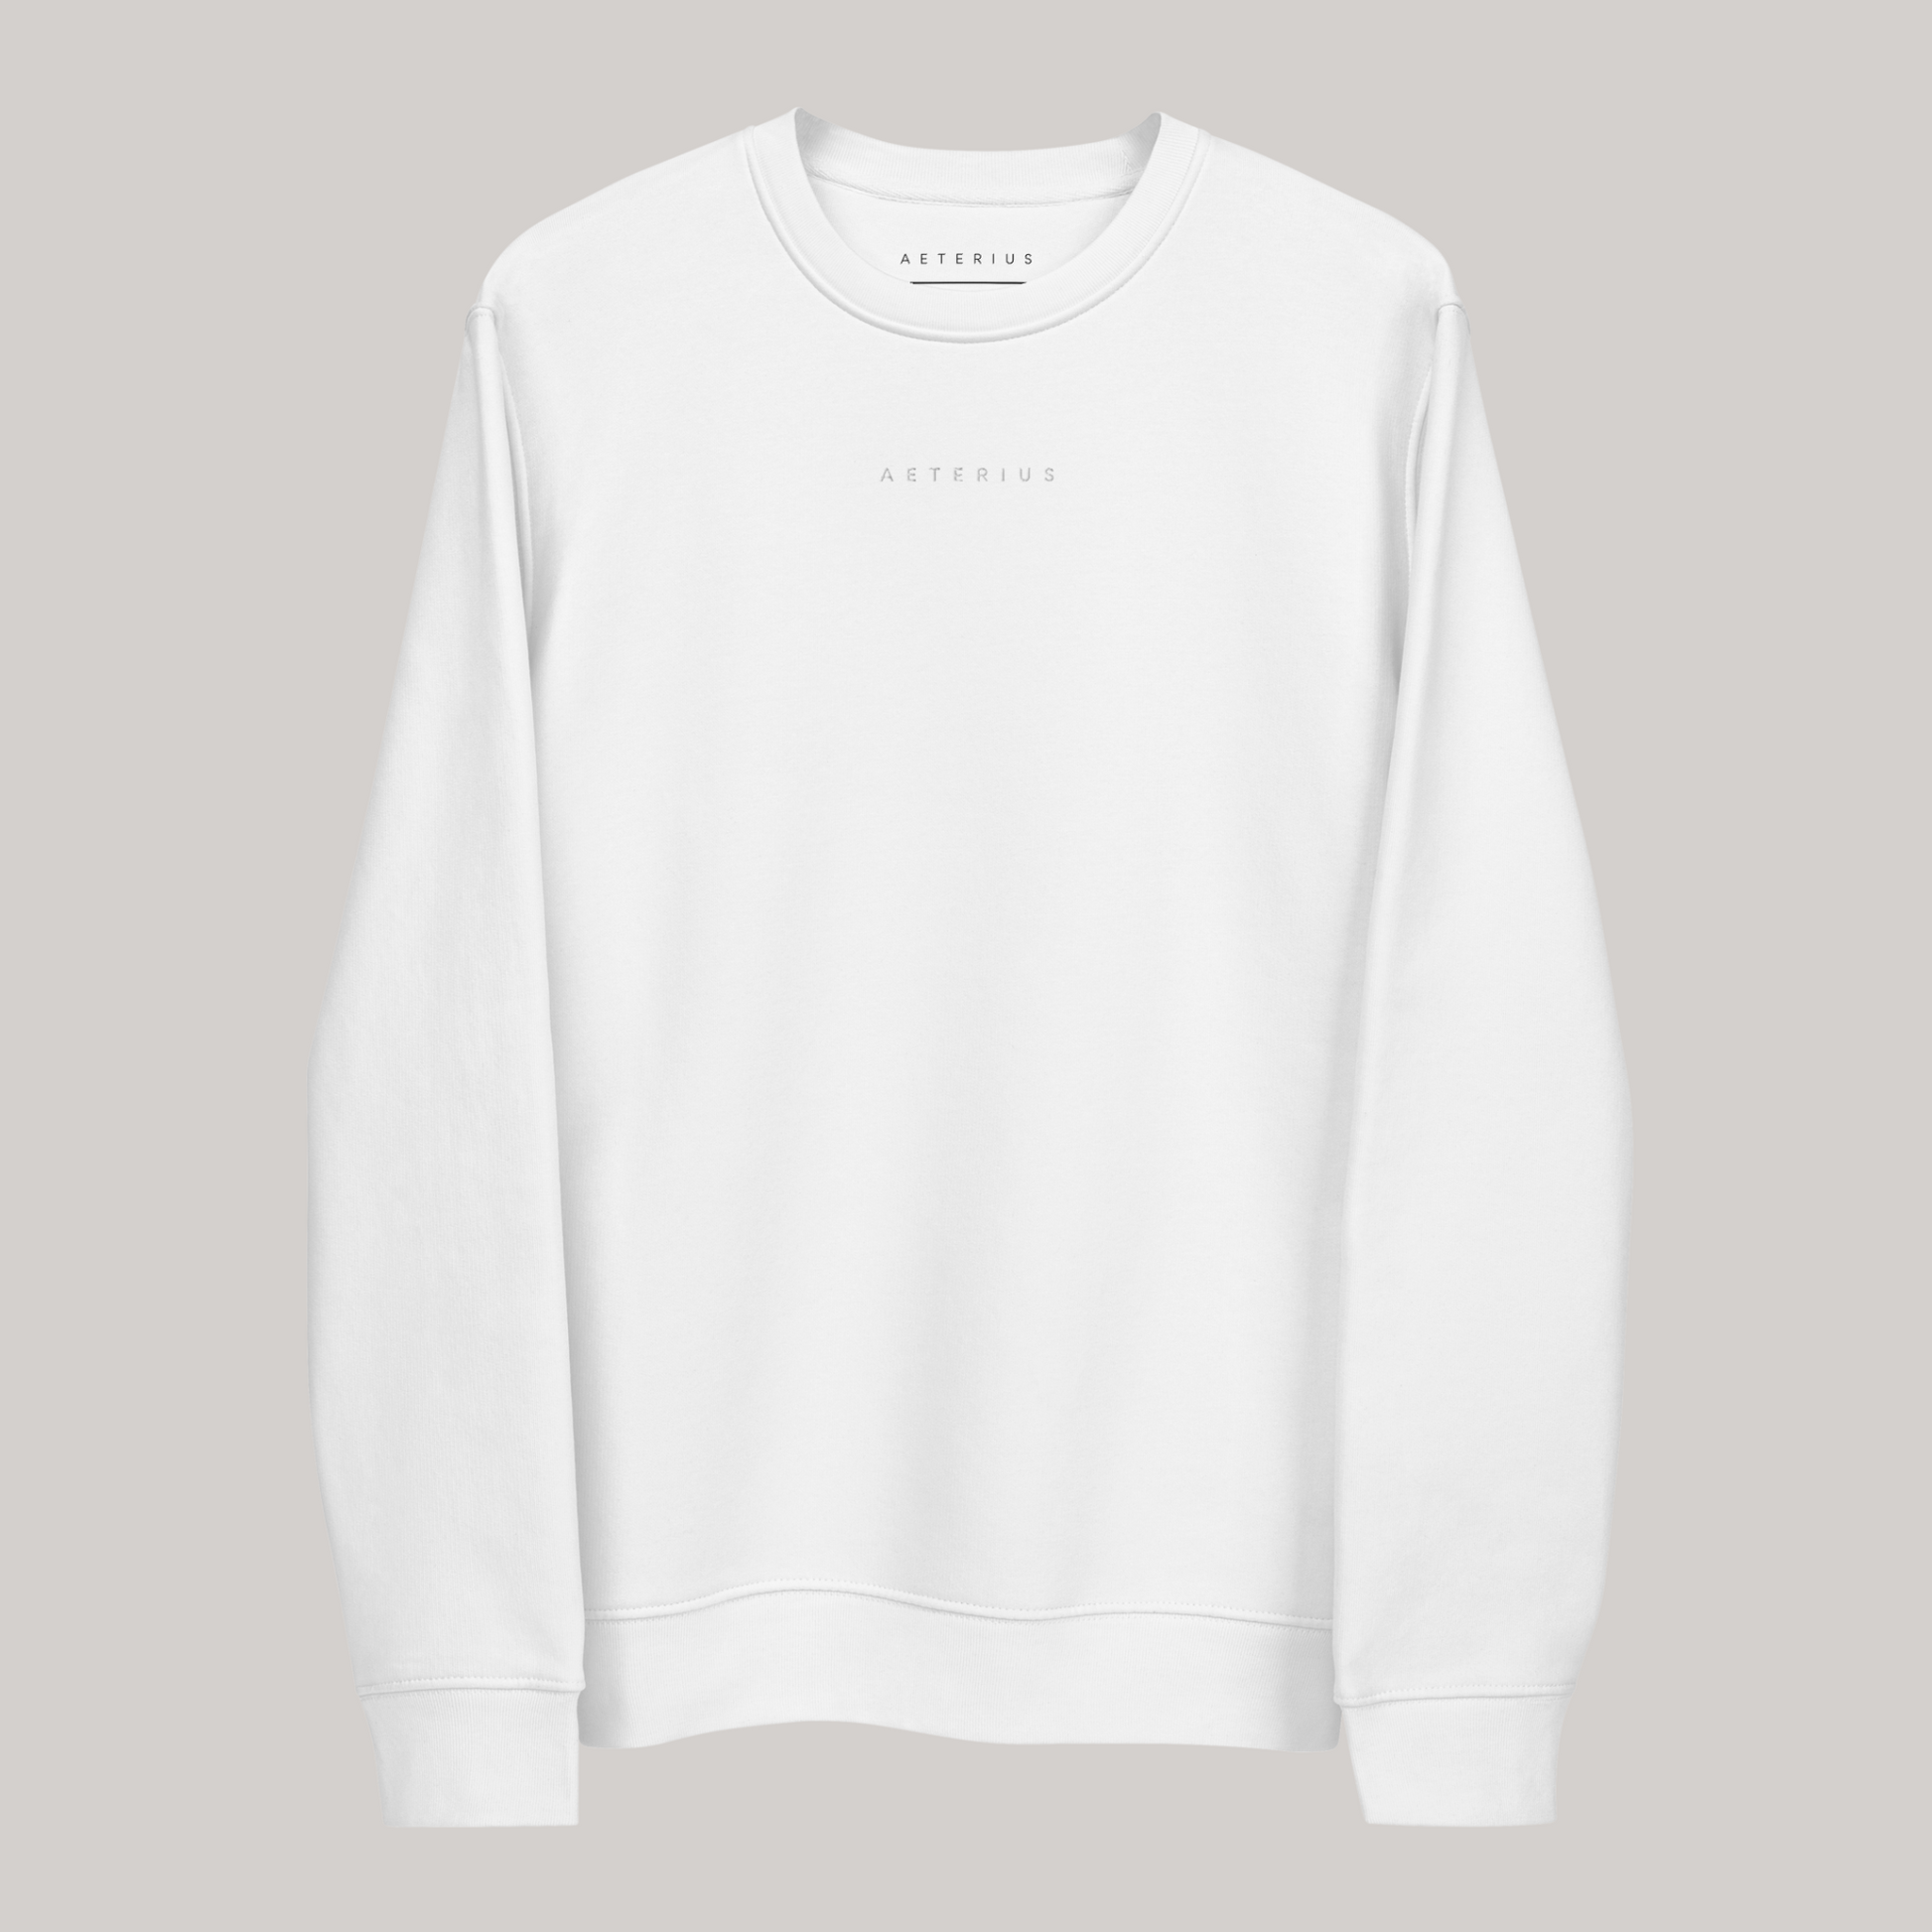 white crewneck sweatshirt with AETERIUS embroidery, luxury streetwear crewneck, white color